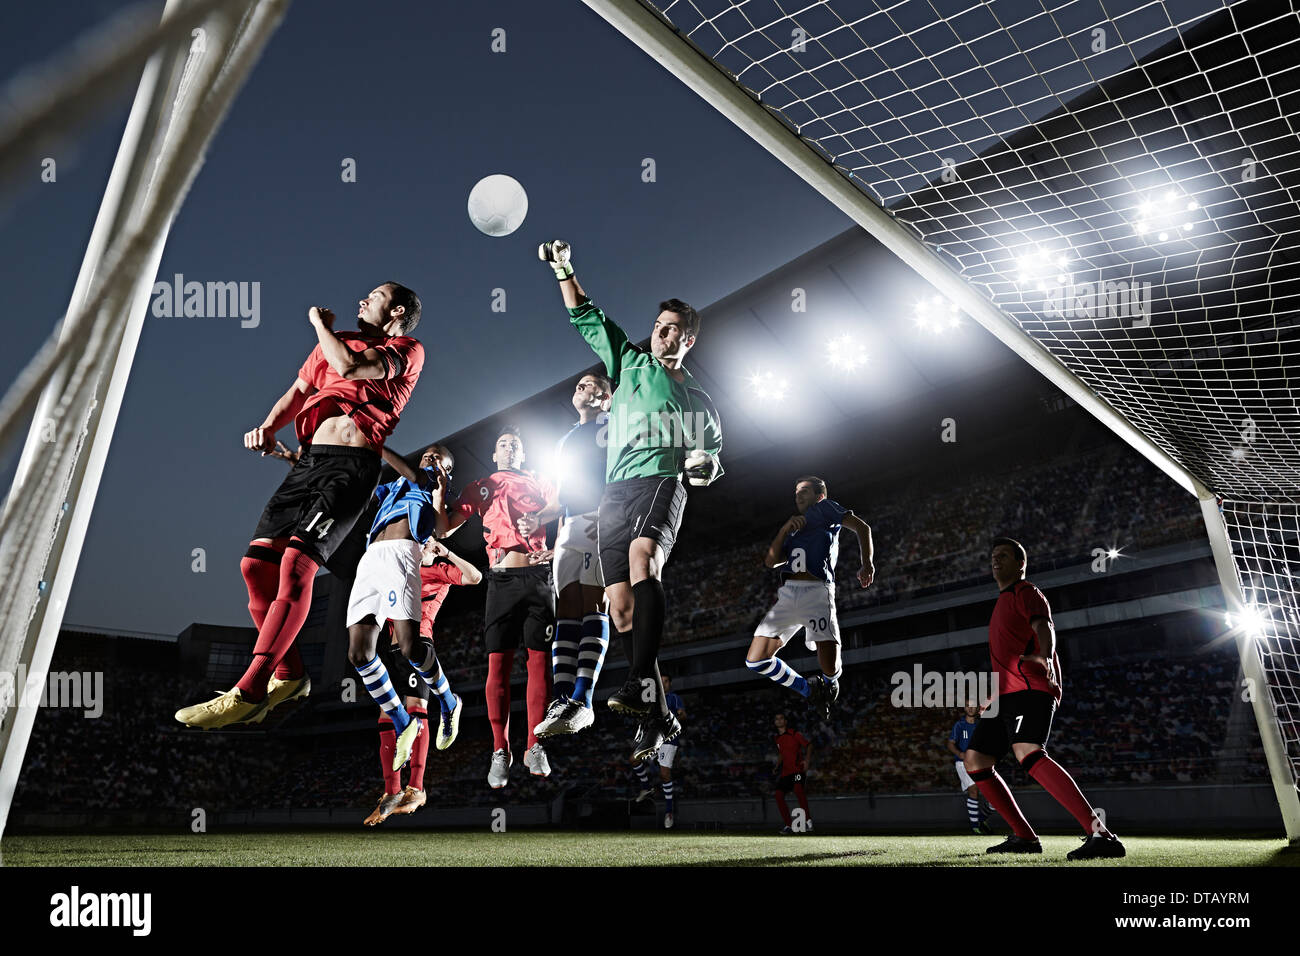 Soccer players defending goal Stock Photo